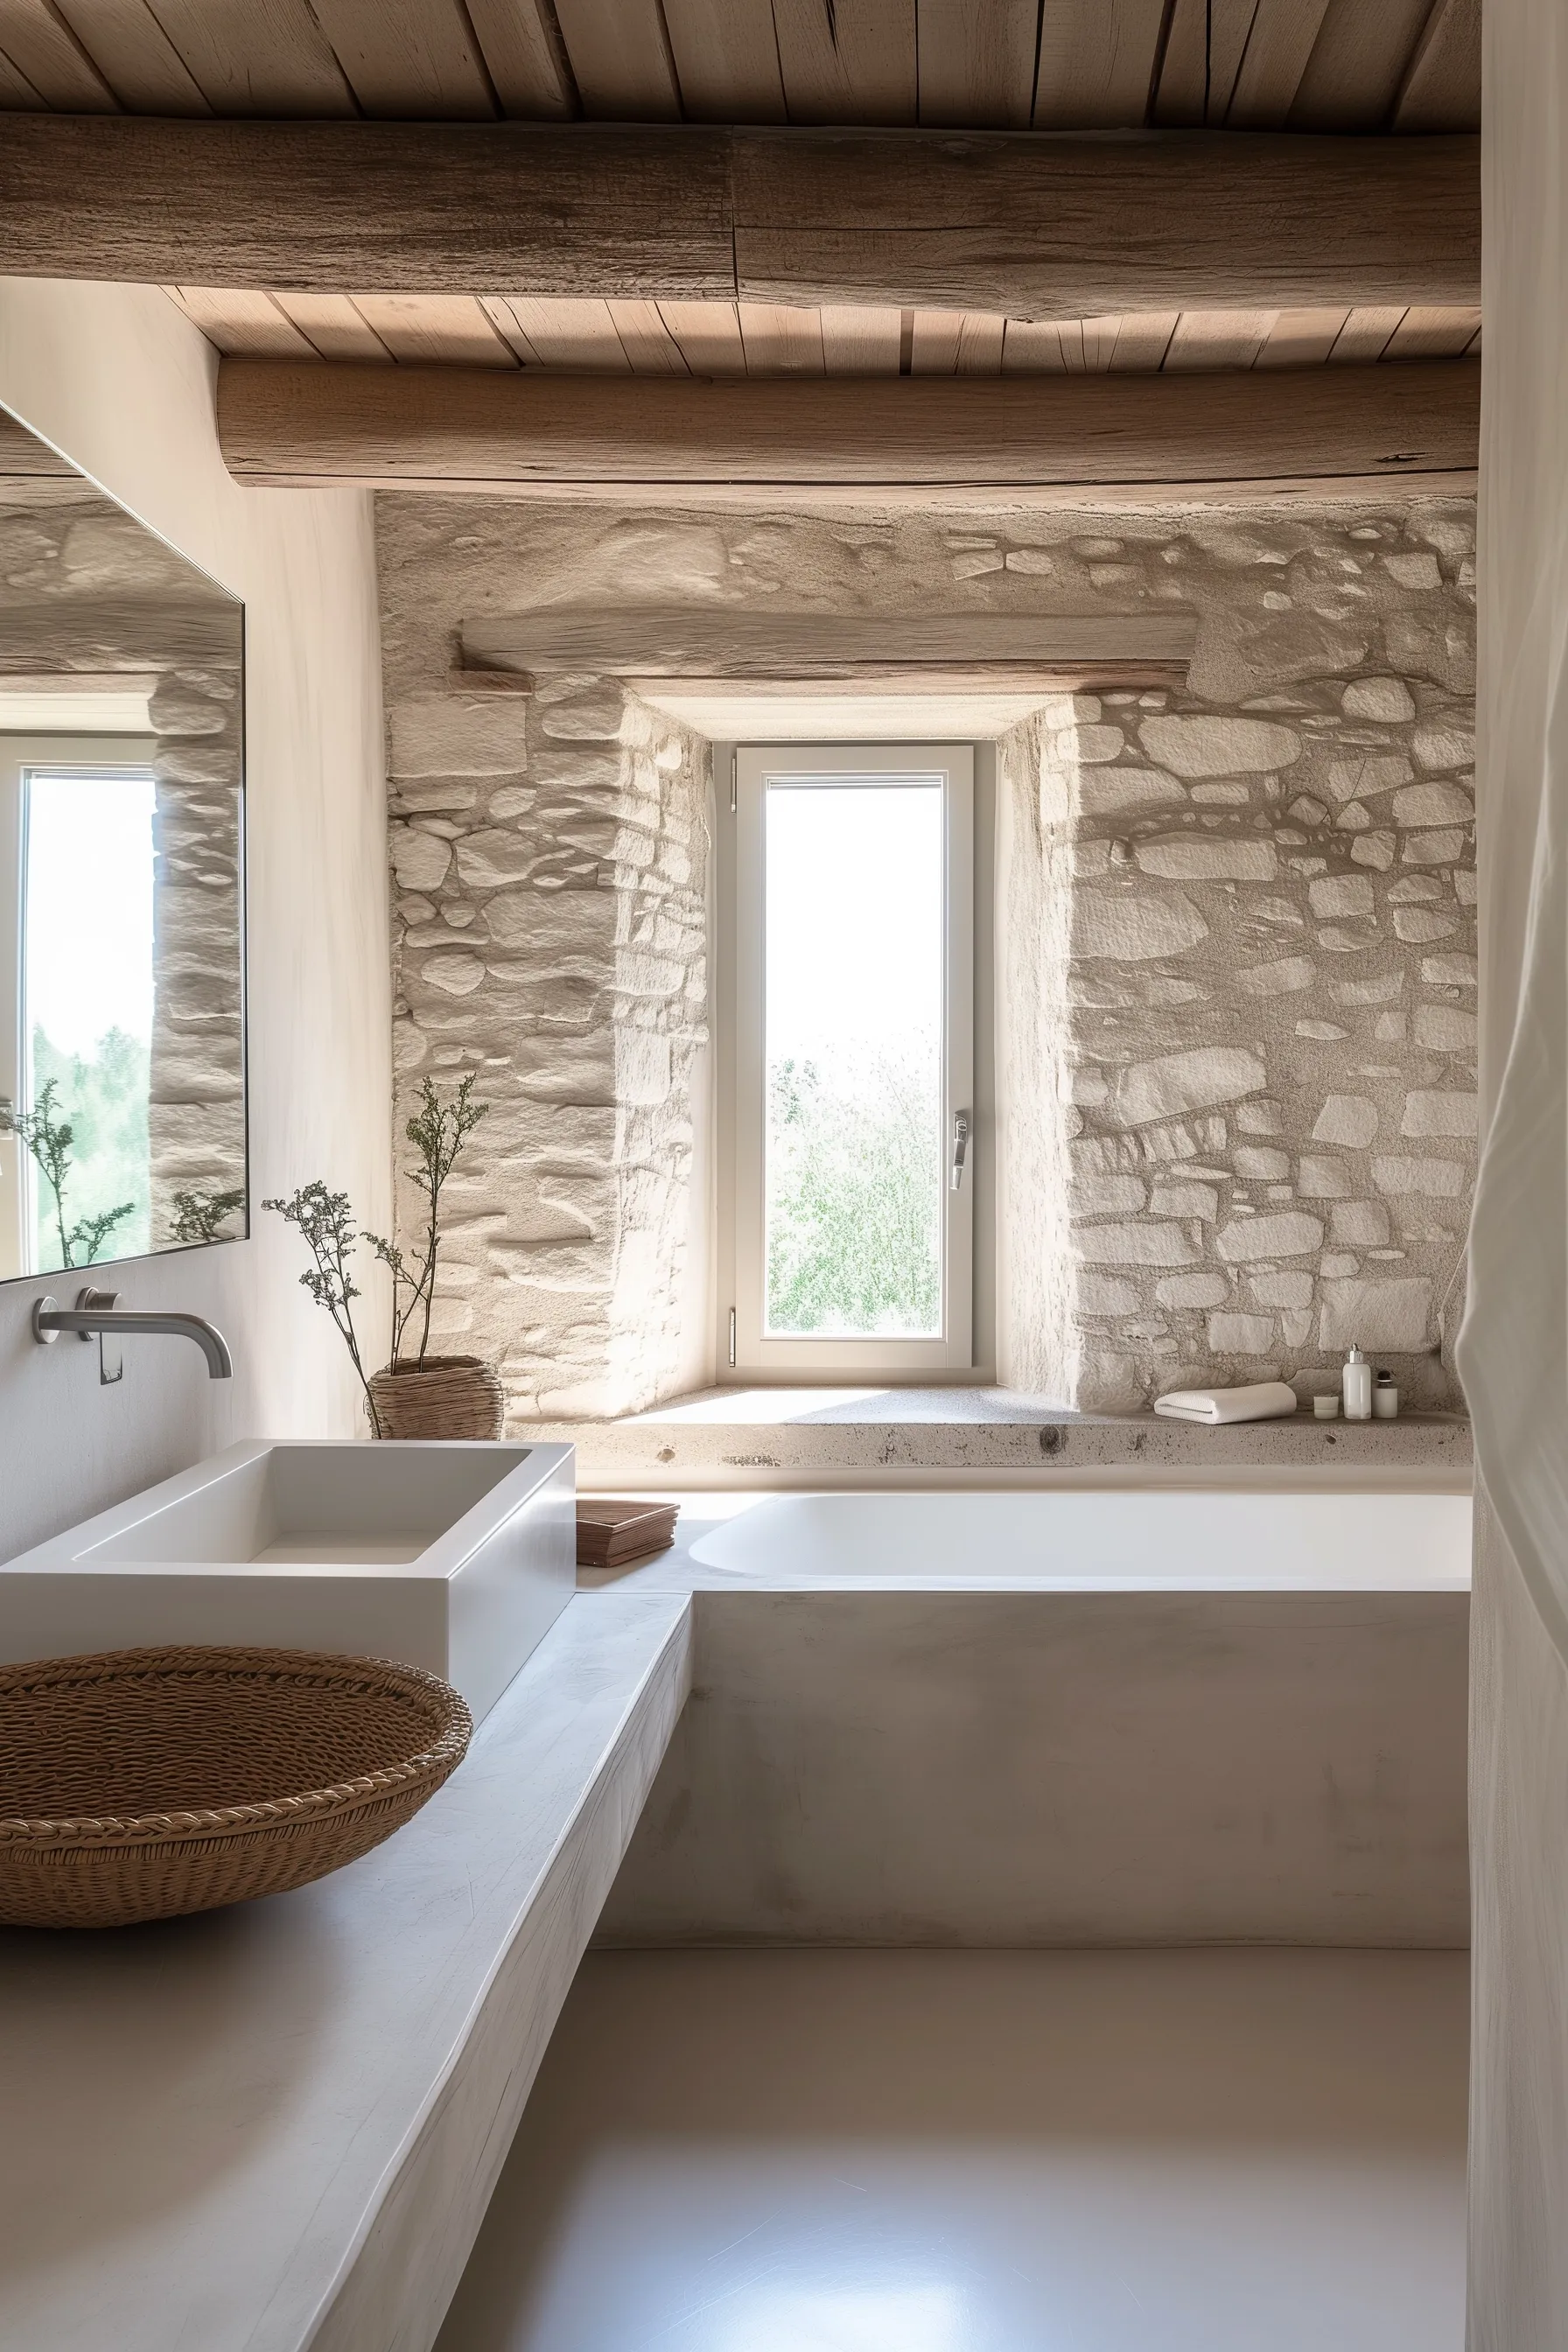 A bathroom with stone walls